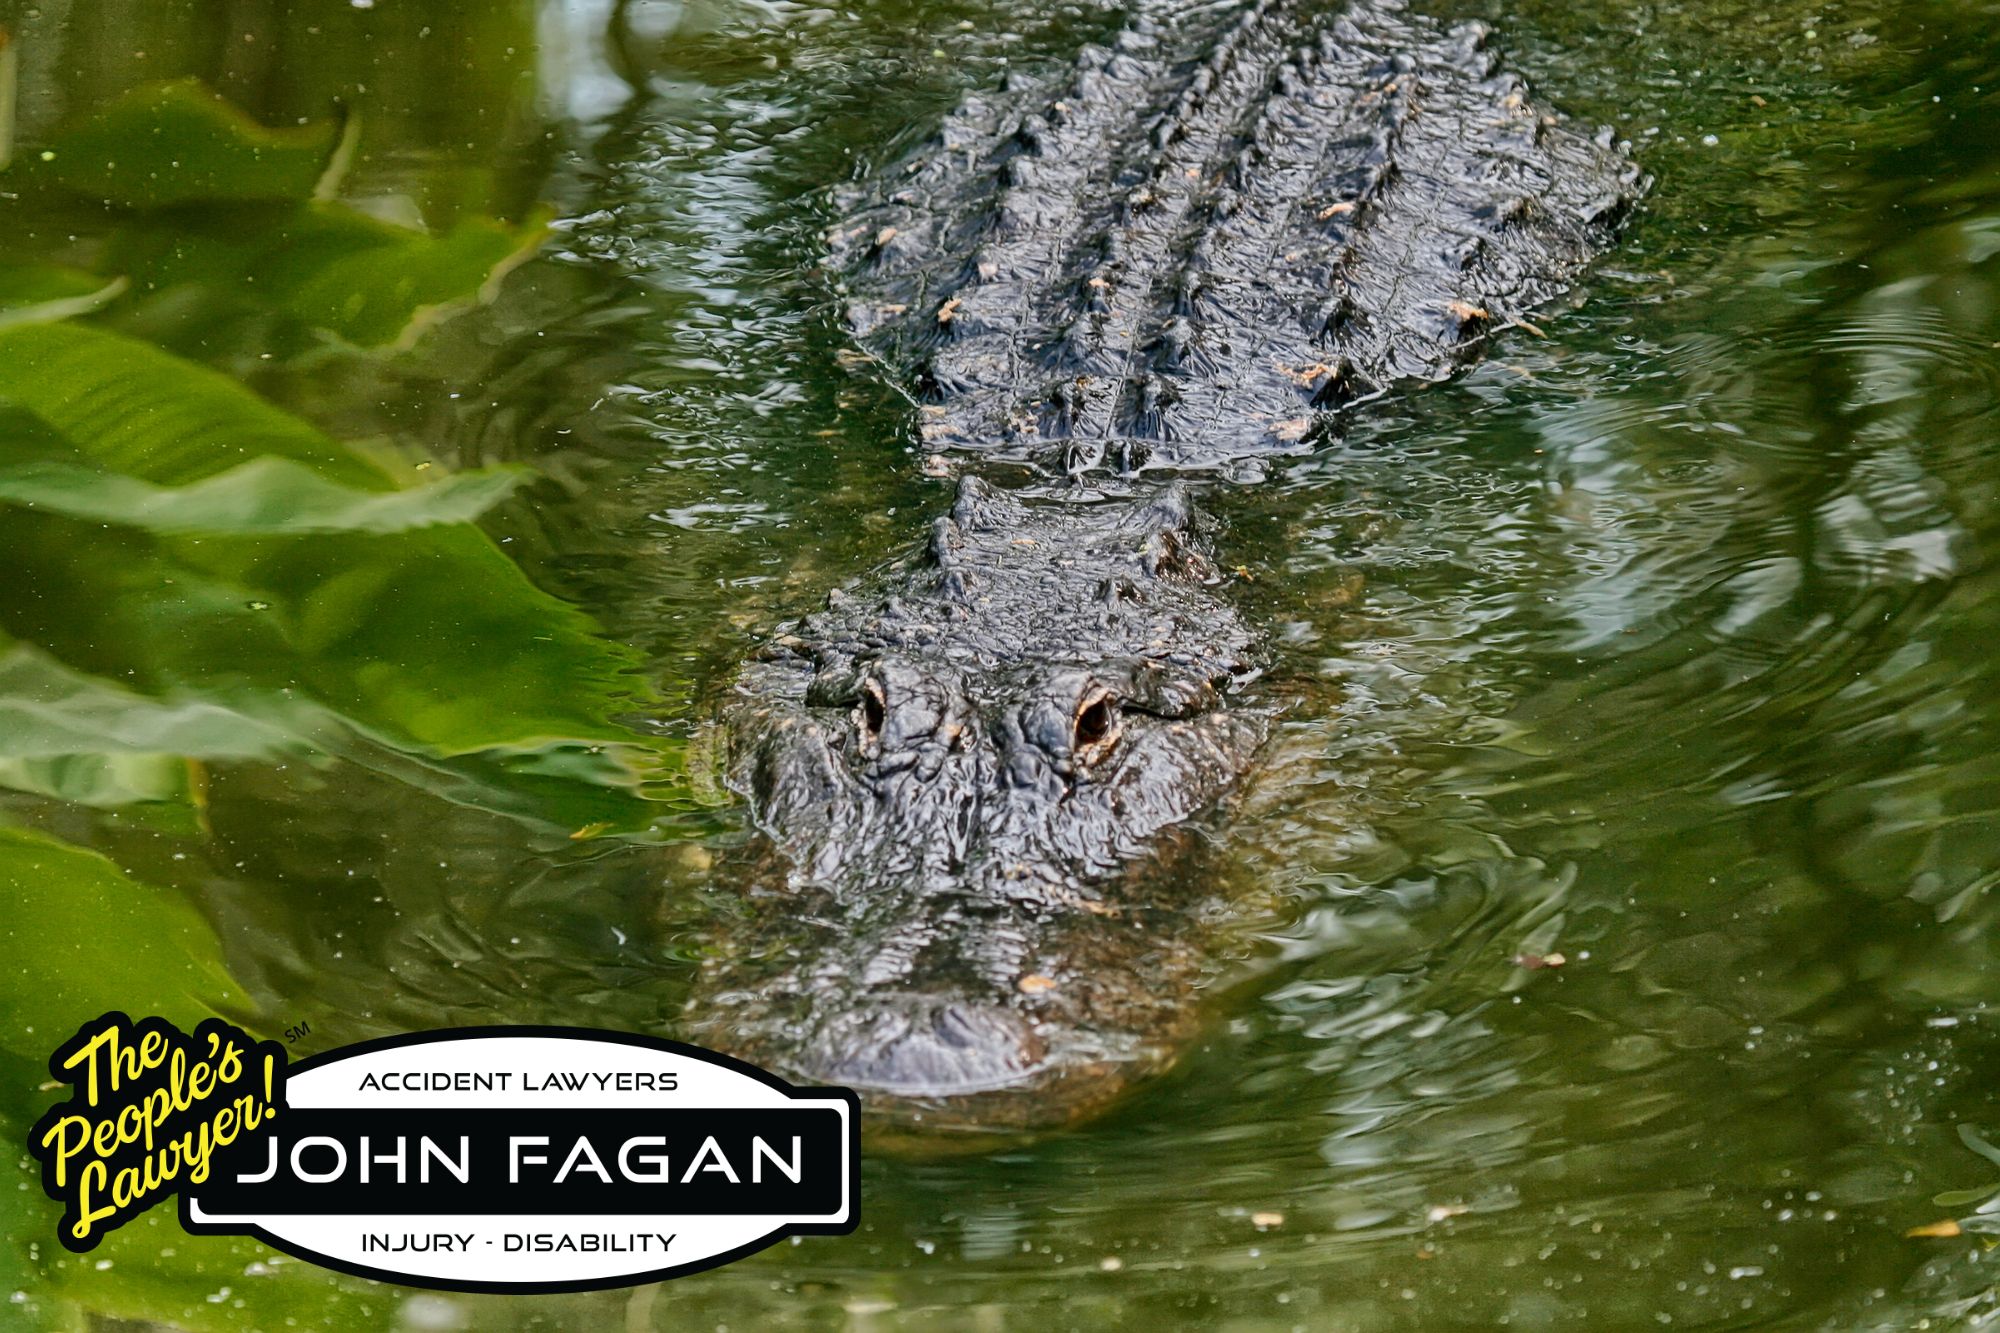 Alligator Safety Advice